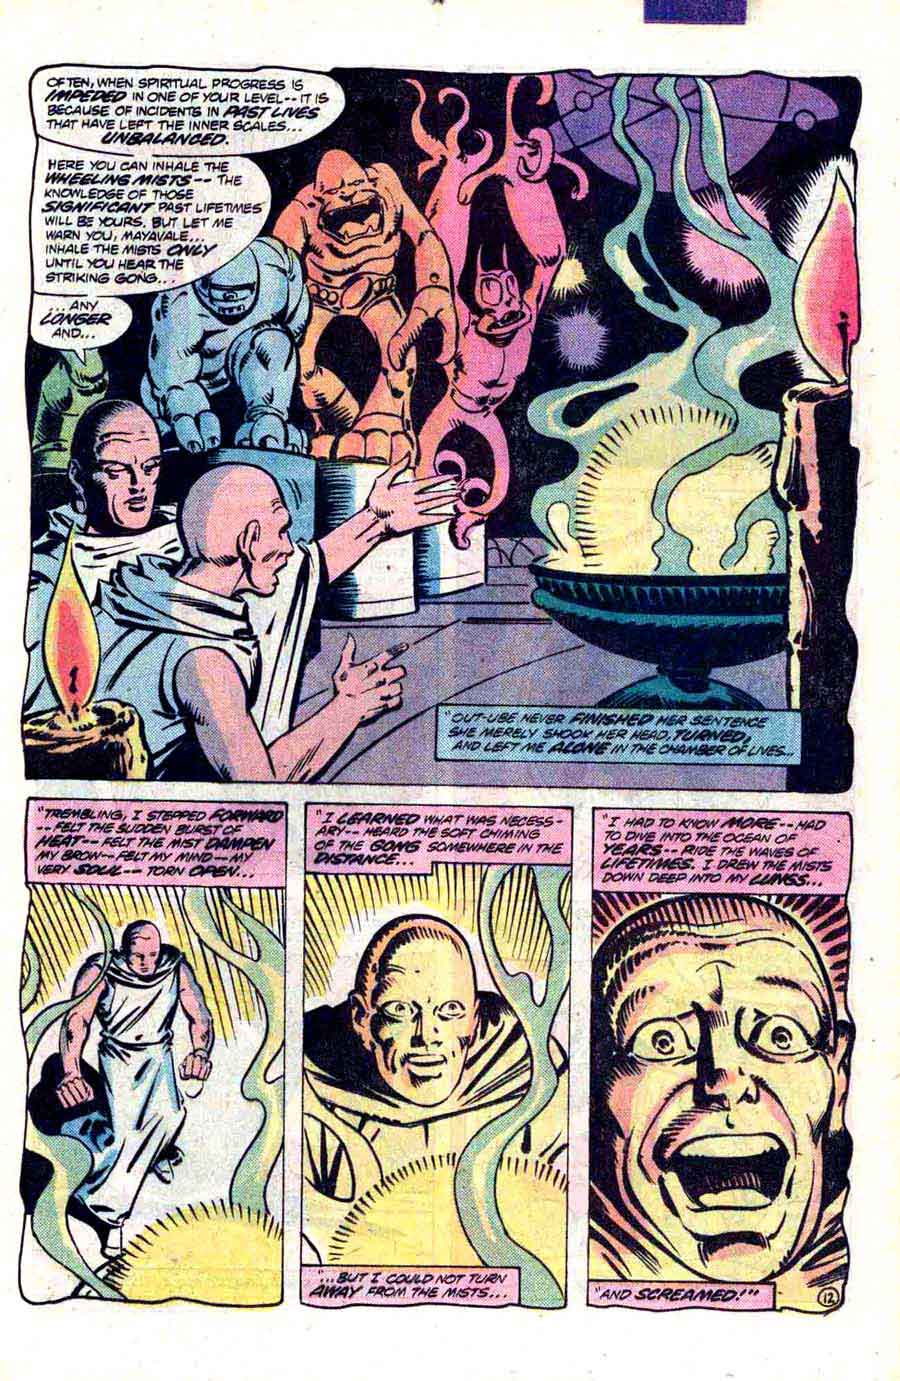 Legion of Super-Heroes v2 #268 - Steve Ditko dc 1980s comic book page art